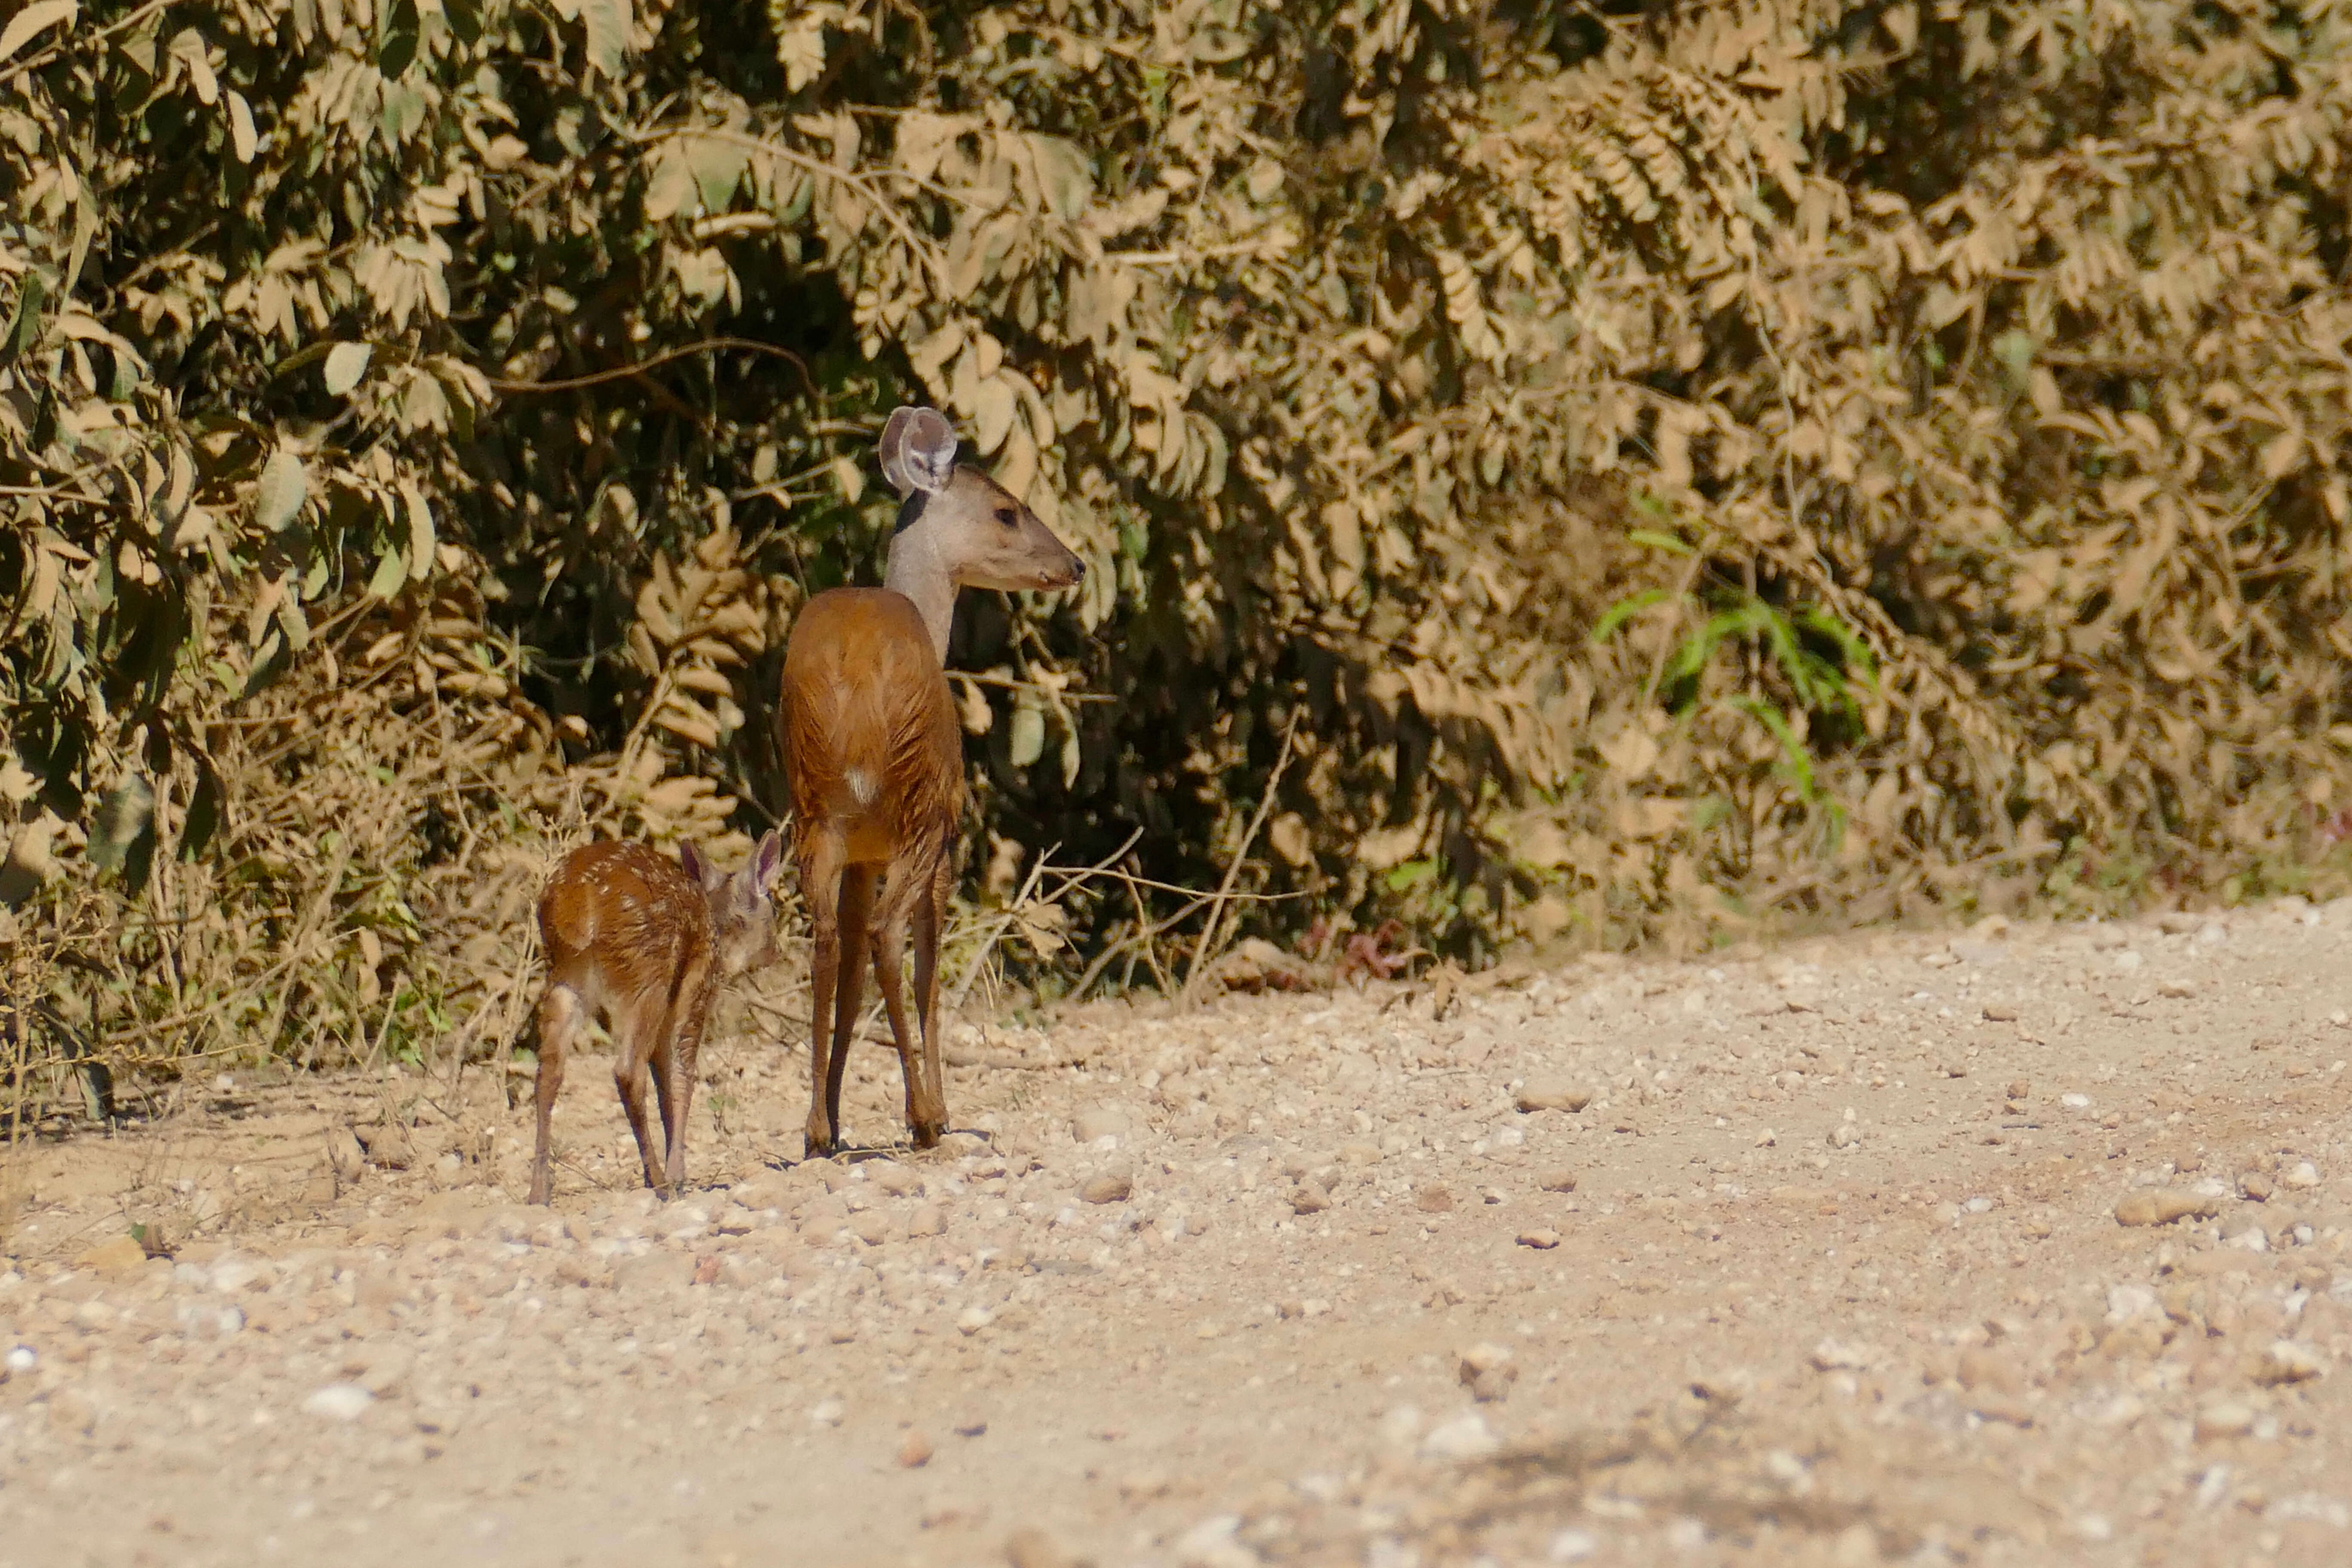 Image of Brocket Deer sp.